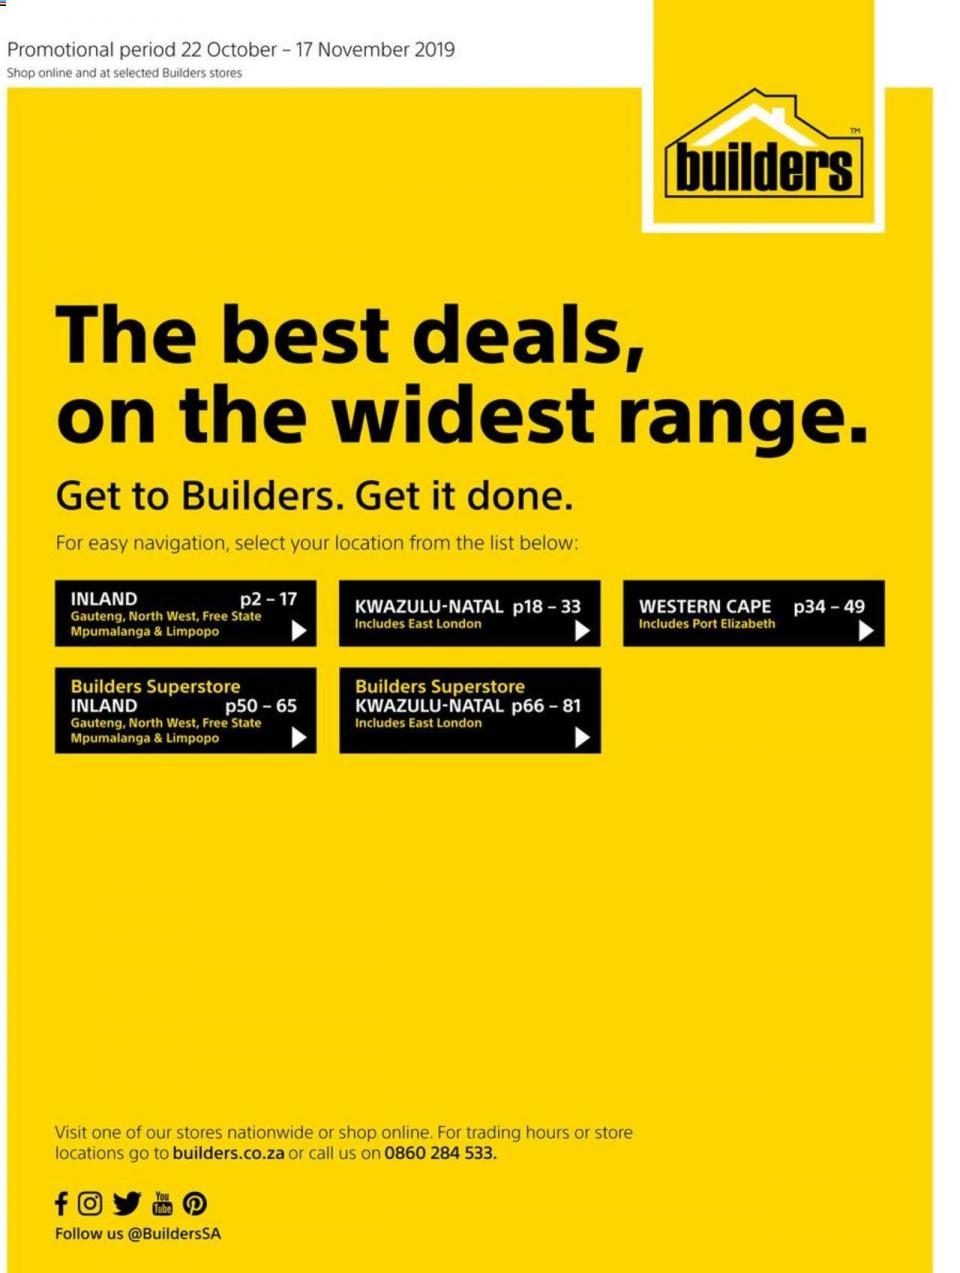 Builders Warehouse Best Deals On The Widest Range 22 October 2019